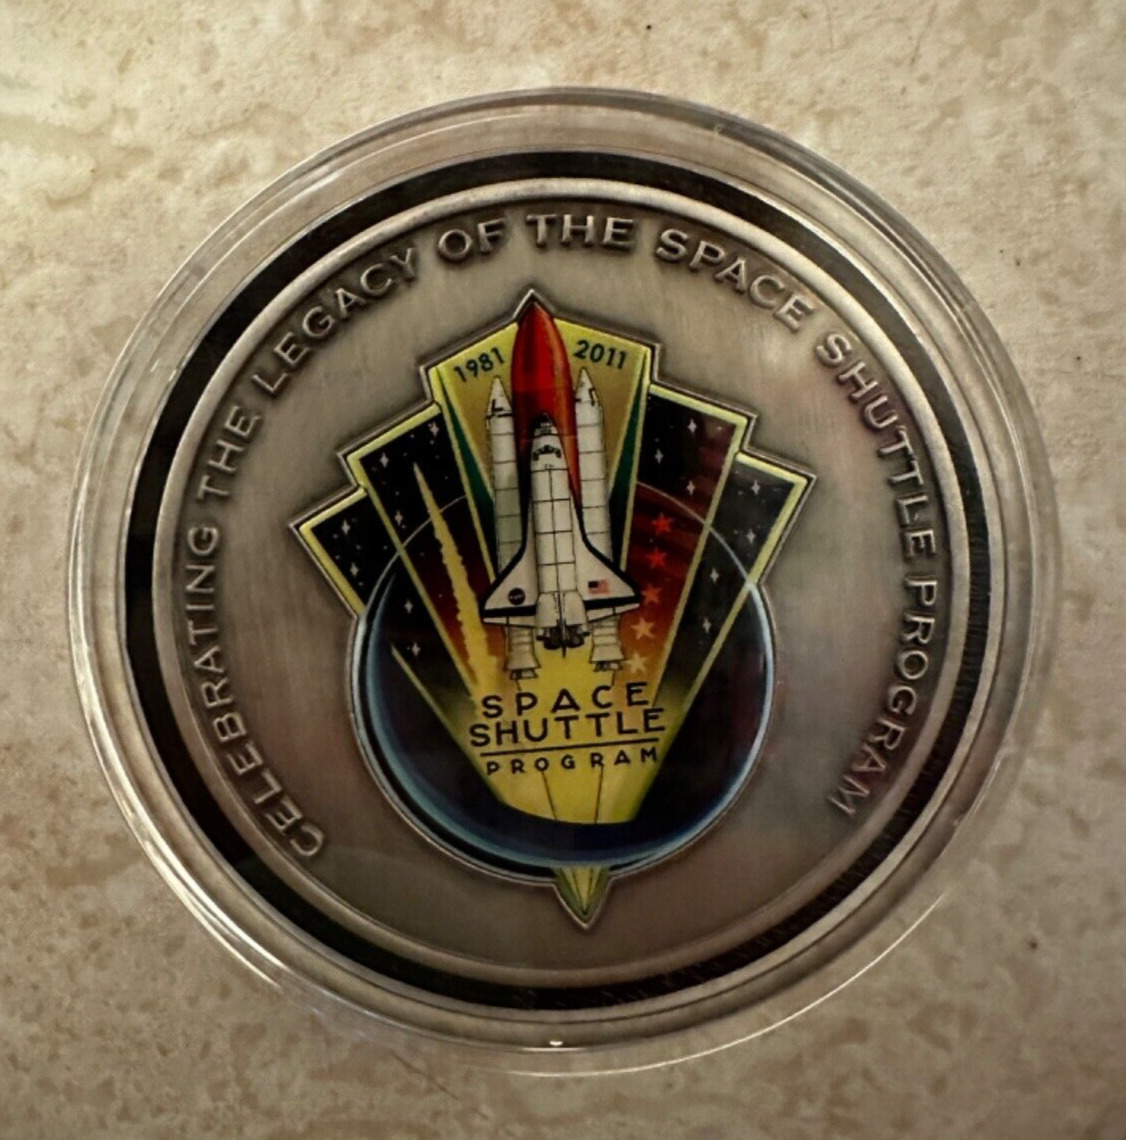 2011 NASA Legacy Space Shuttle Program Challenge Coin -- Metal Flown on Shuttle